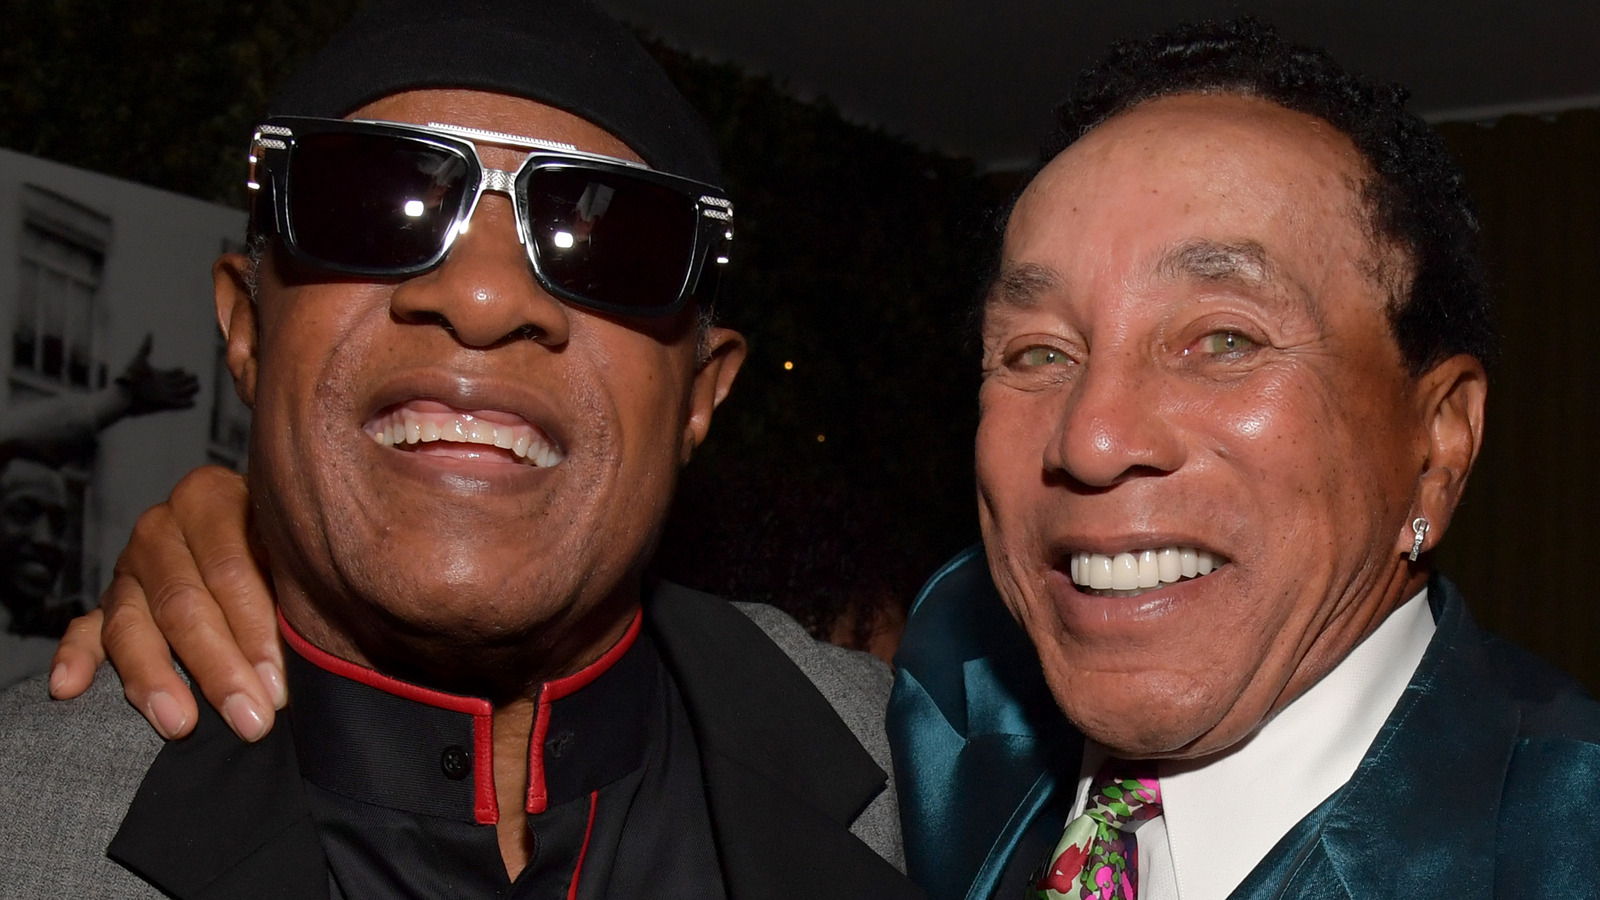 MusiCares 2023: Smokey Robinson, Berry Gordy honored by Stevie Wonder